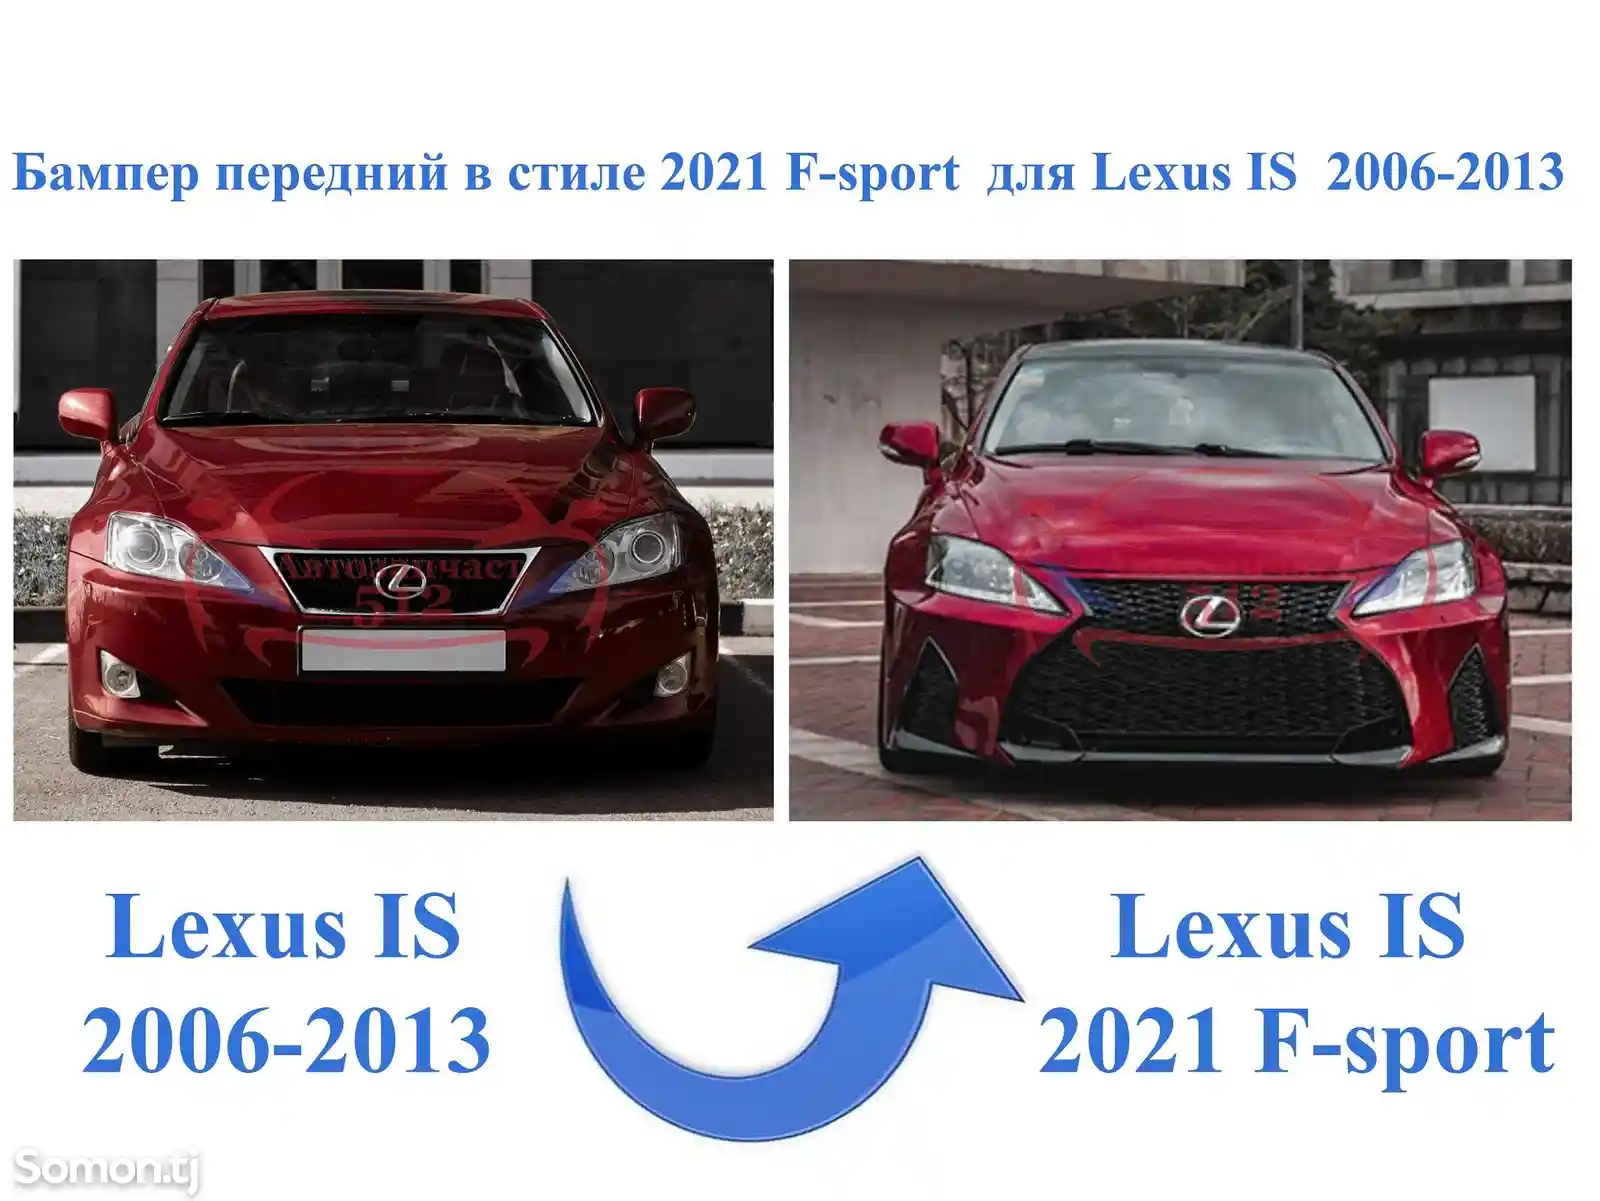 Передний бампер в стиле 2021 на Lexus IS 2006-2013 на заказ-3